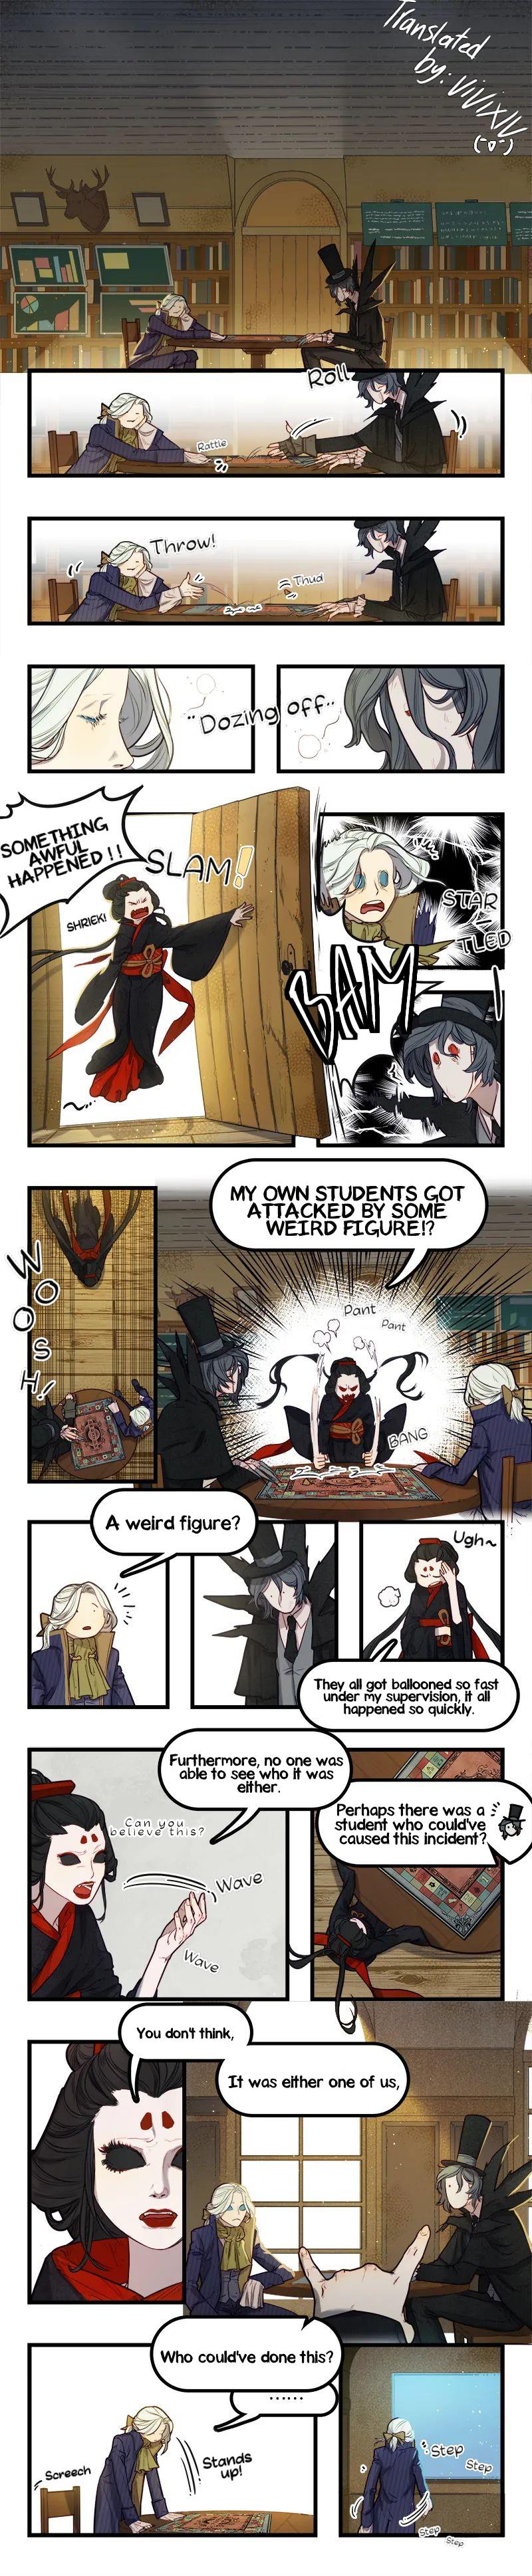 Identity V Academy - Page 1